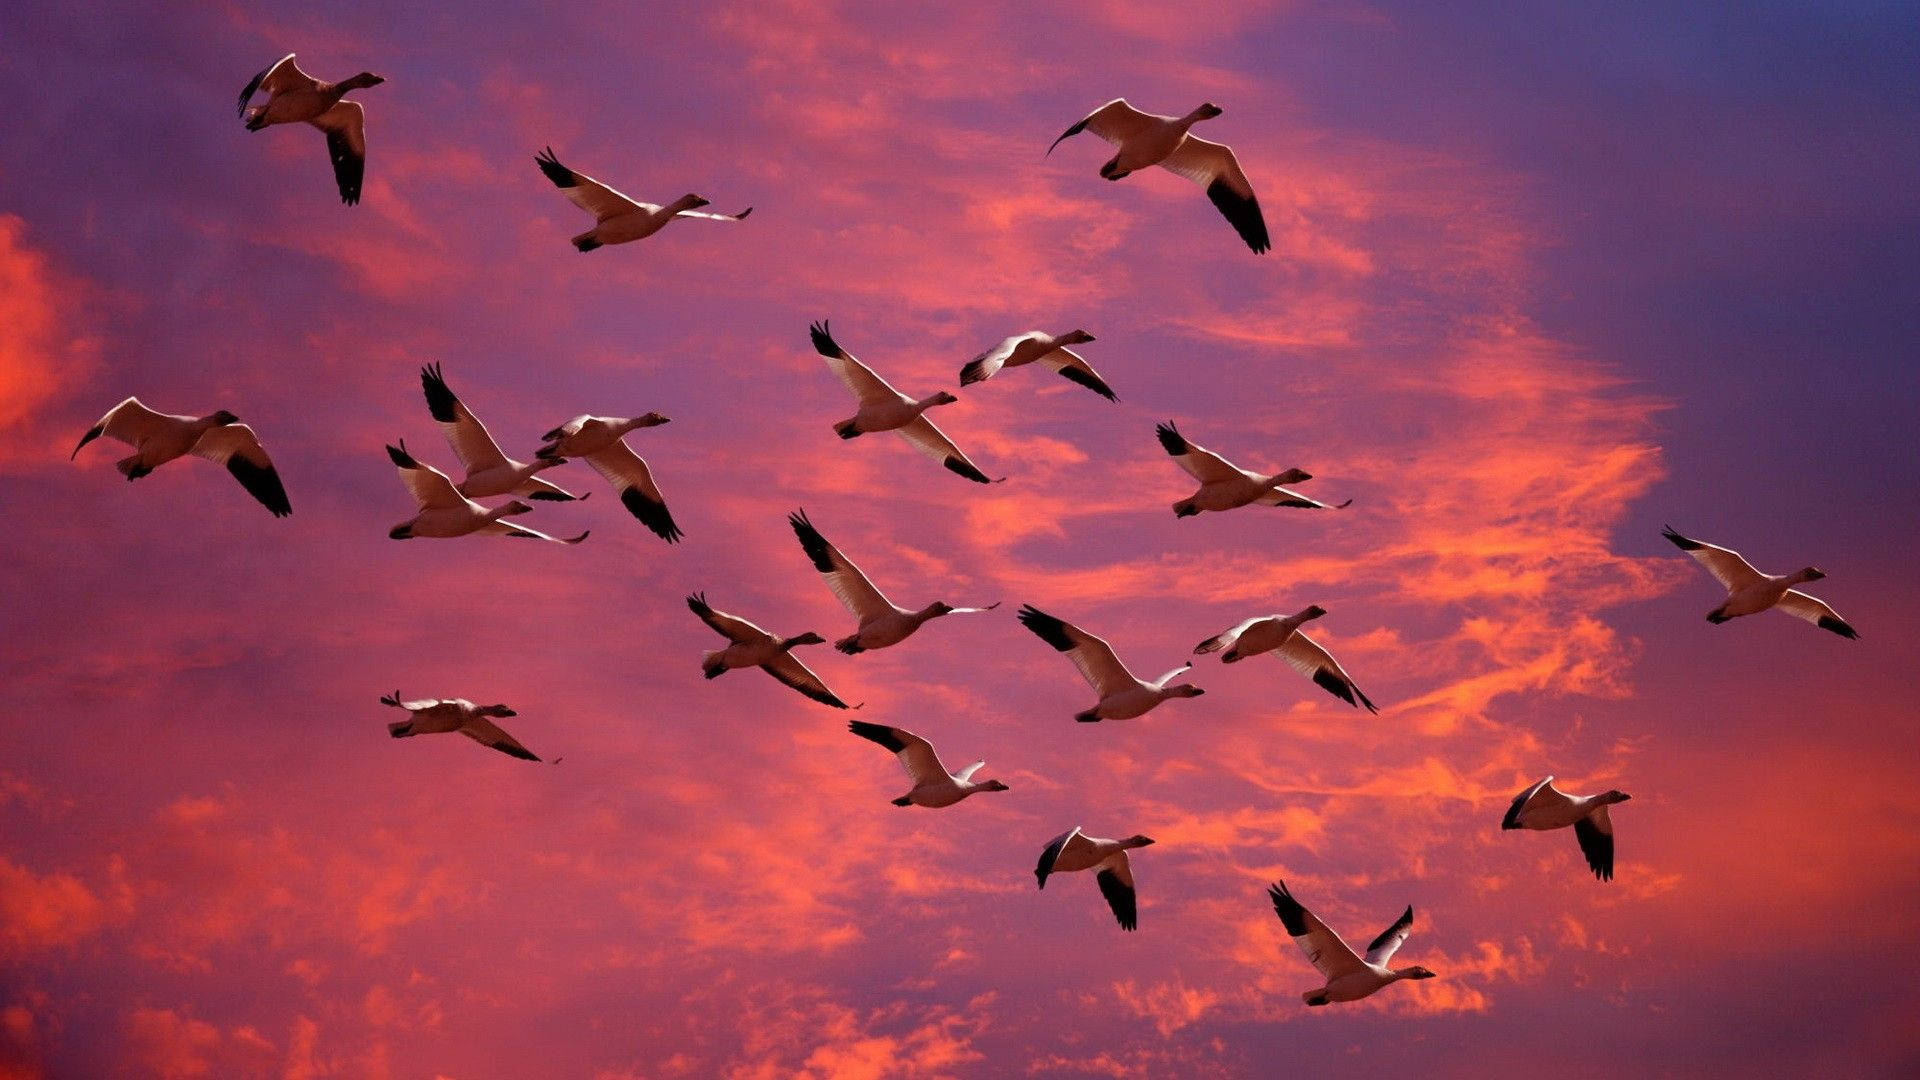 Free Birds Flying Wallpaper Downloads, Birds Flying Wallpaper for FREE